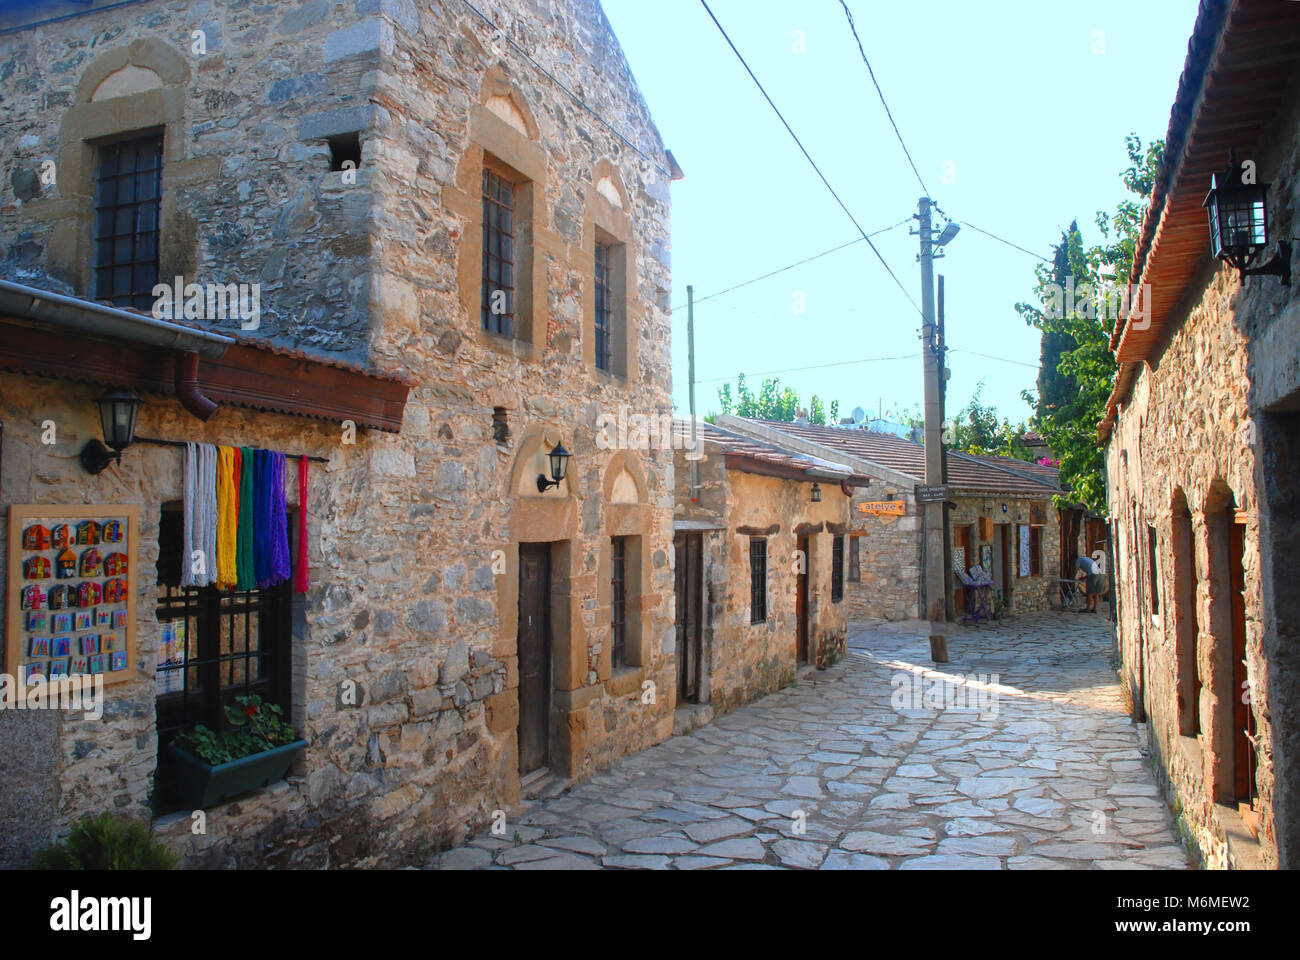 Cobblestone street in old city center of Datca, a district in Aegean region of Turkey Stock Photo